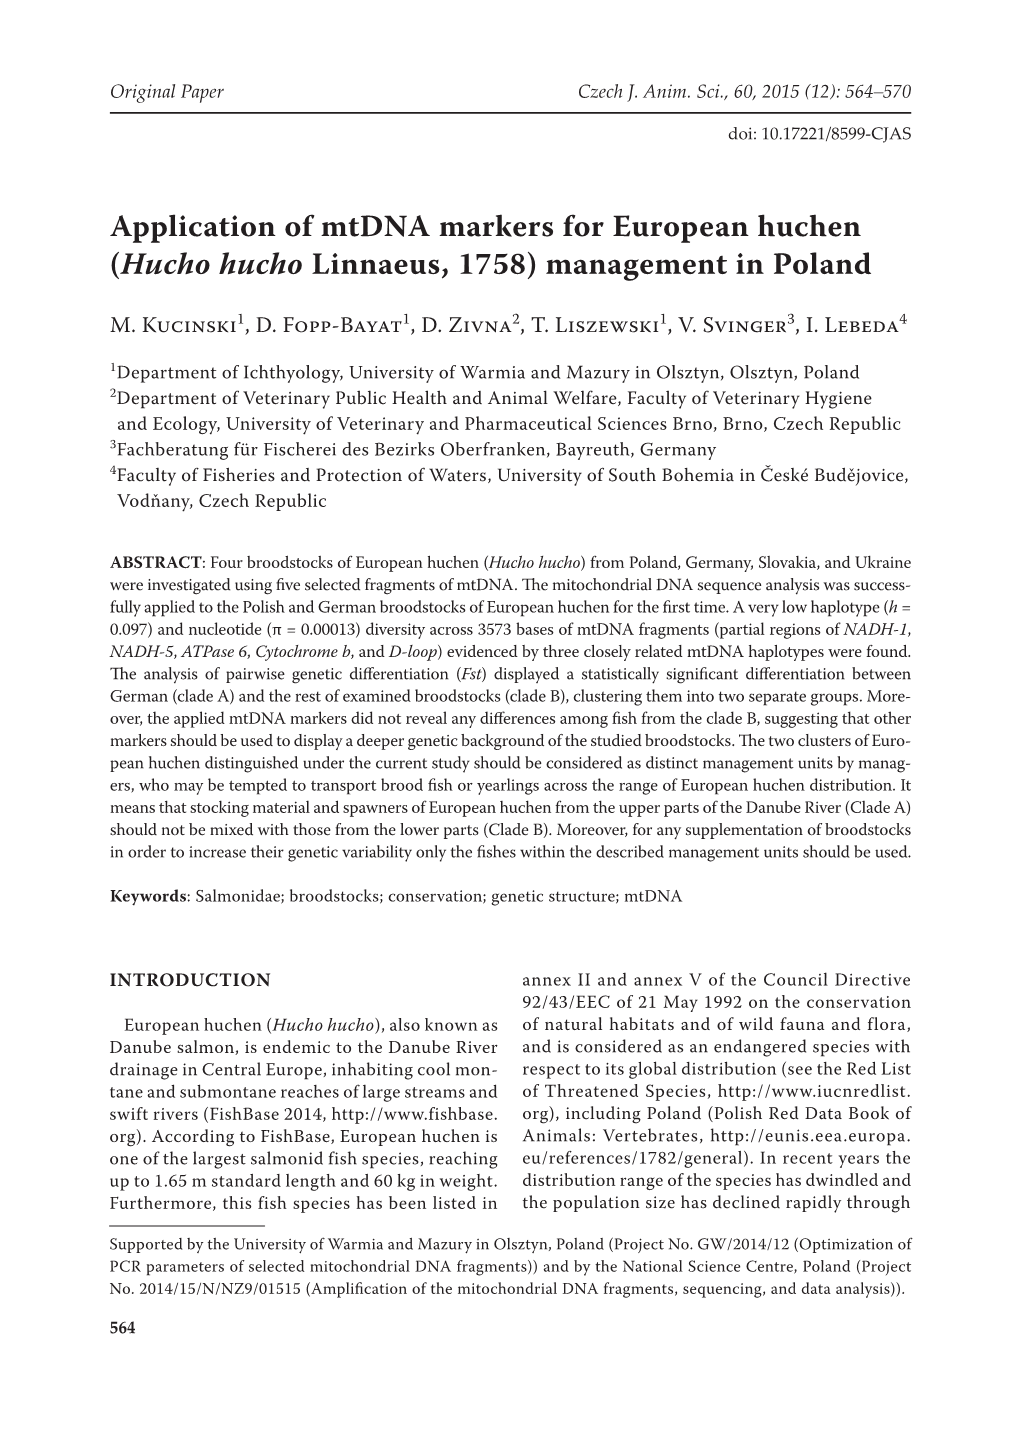 Application of Mtdna Markers for European Huchen (Hucho Hucho Linnaeus, 1758) Management in Poland